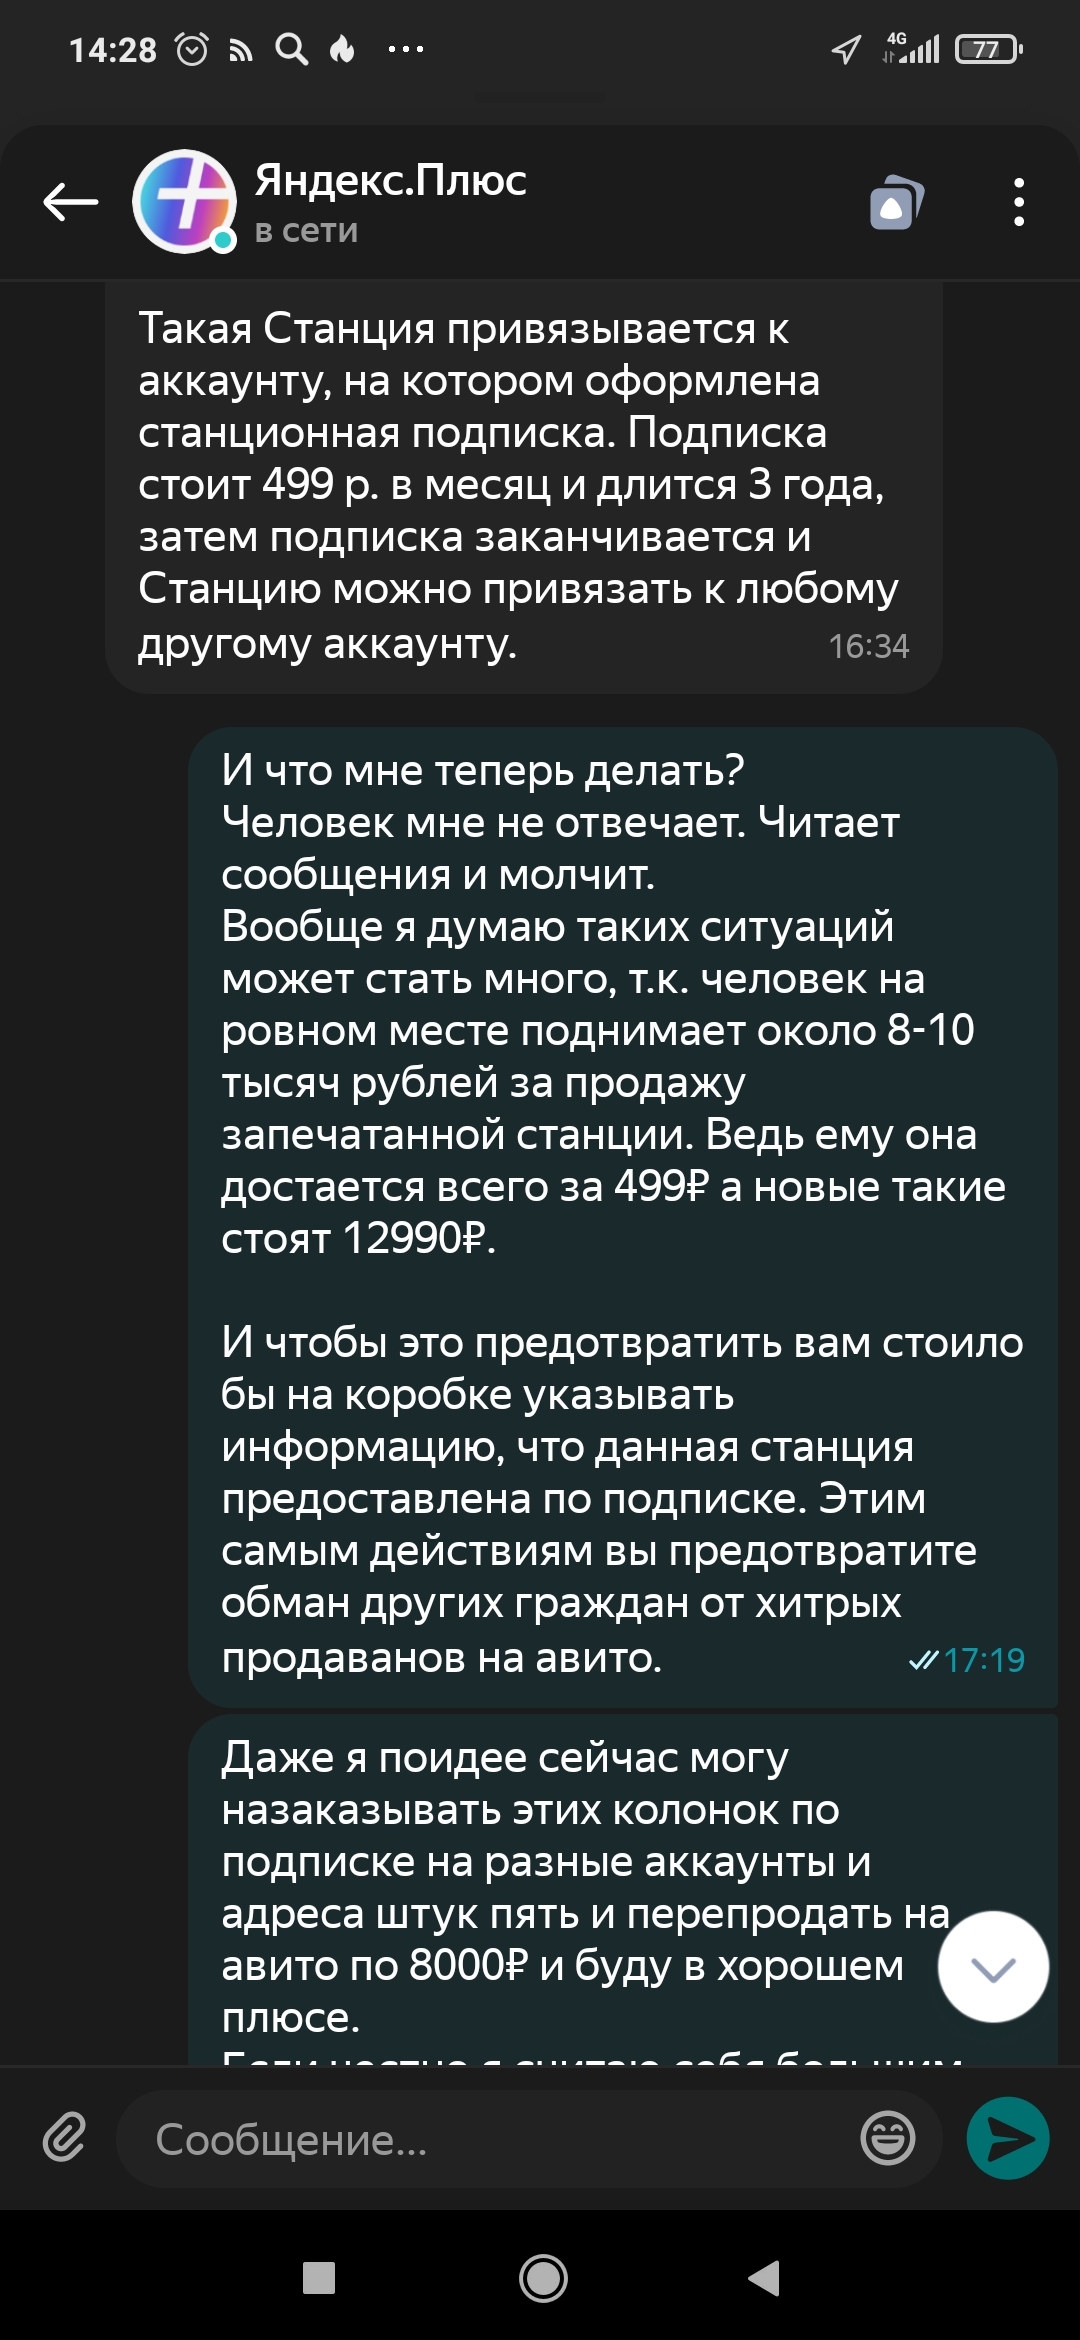 Scam on Avito Yandex station - My, Deception, Avito, Yandex Alice, Yandex., Yandex Station, No rating, Longpost, Negative